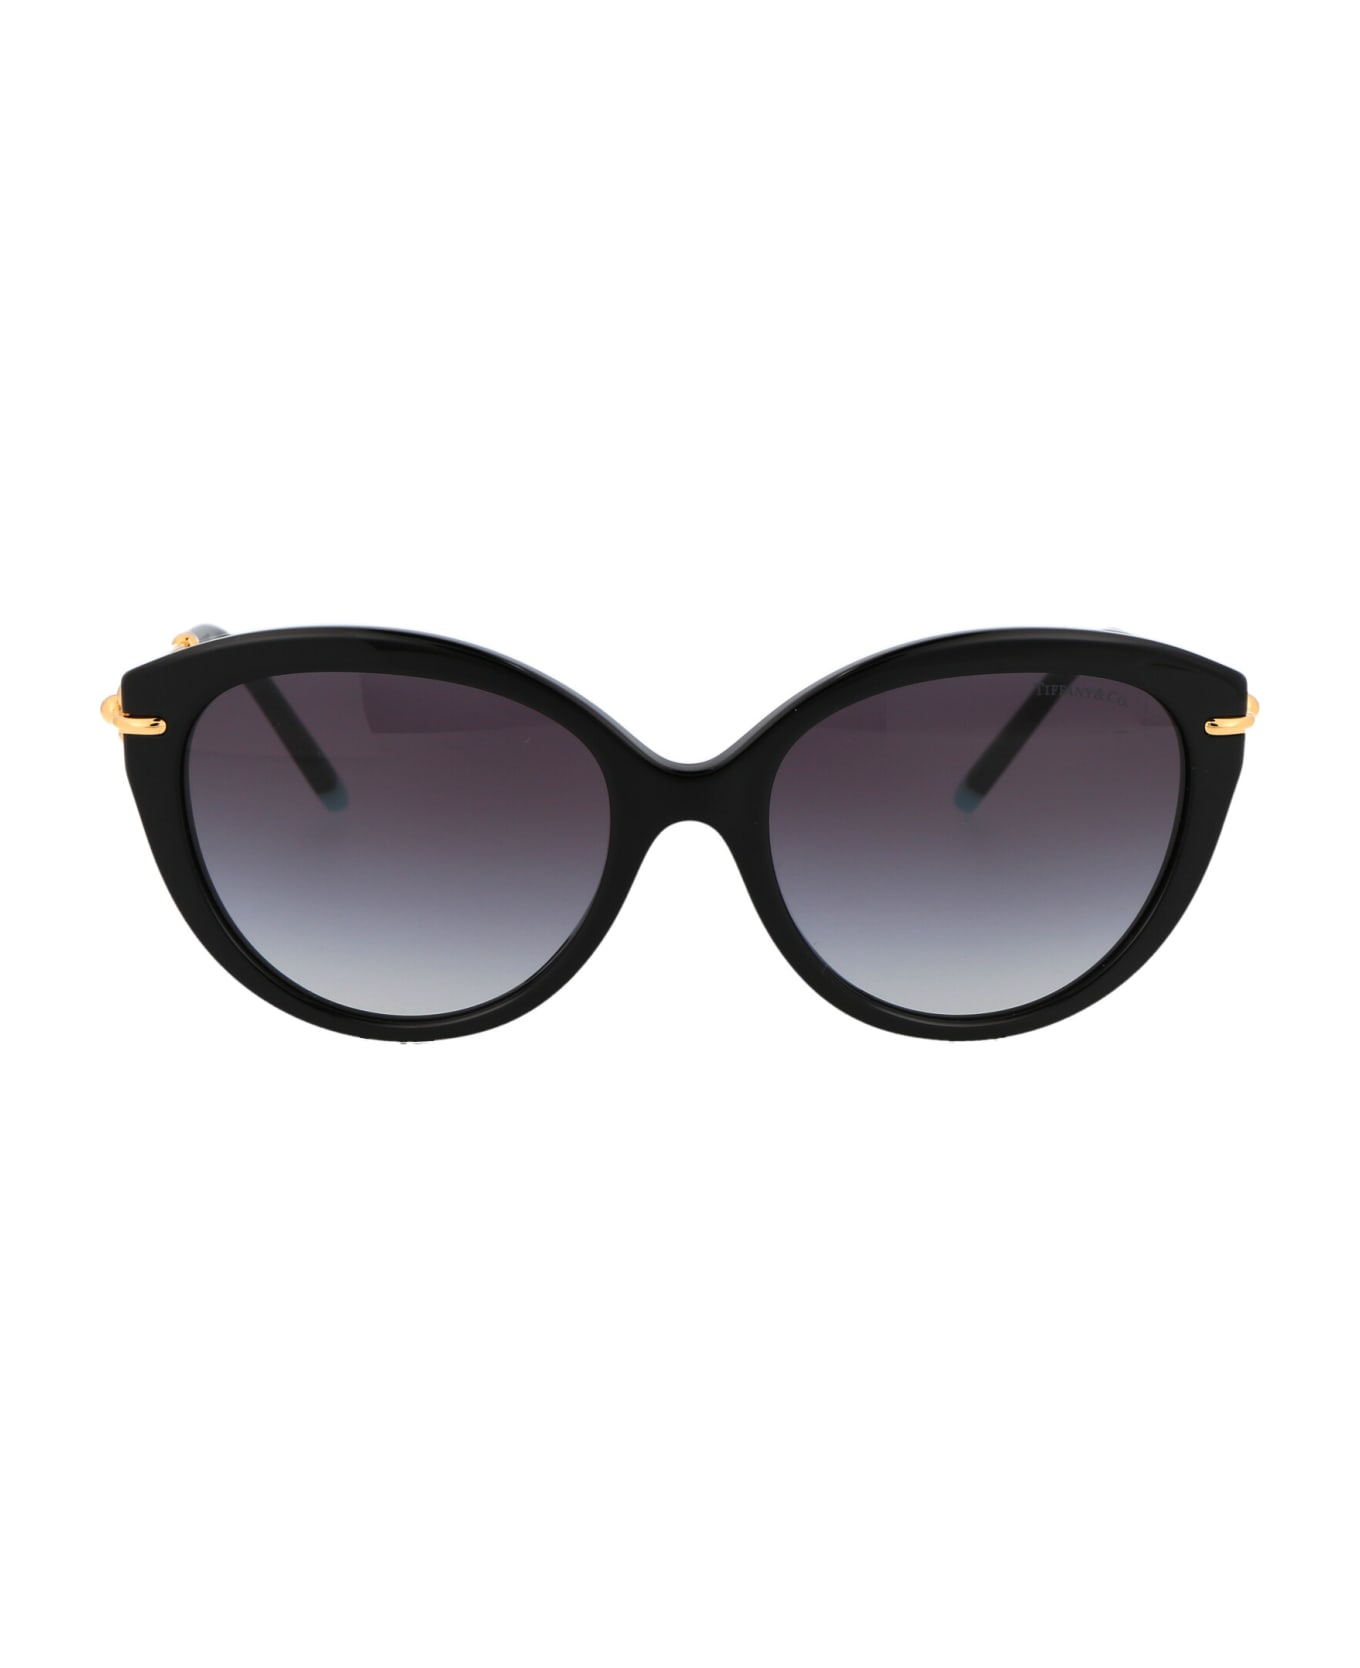 Tiffany & Co. 0tf4187 Sunglasses Classic - 80013C Black